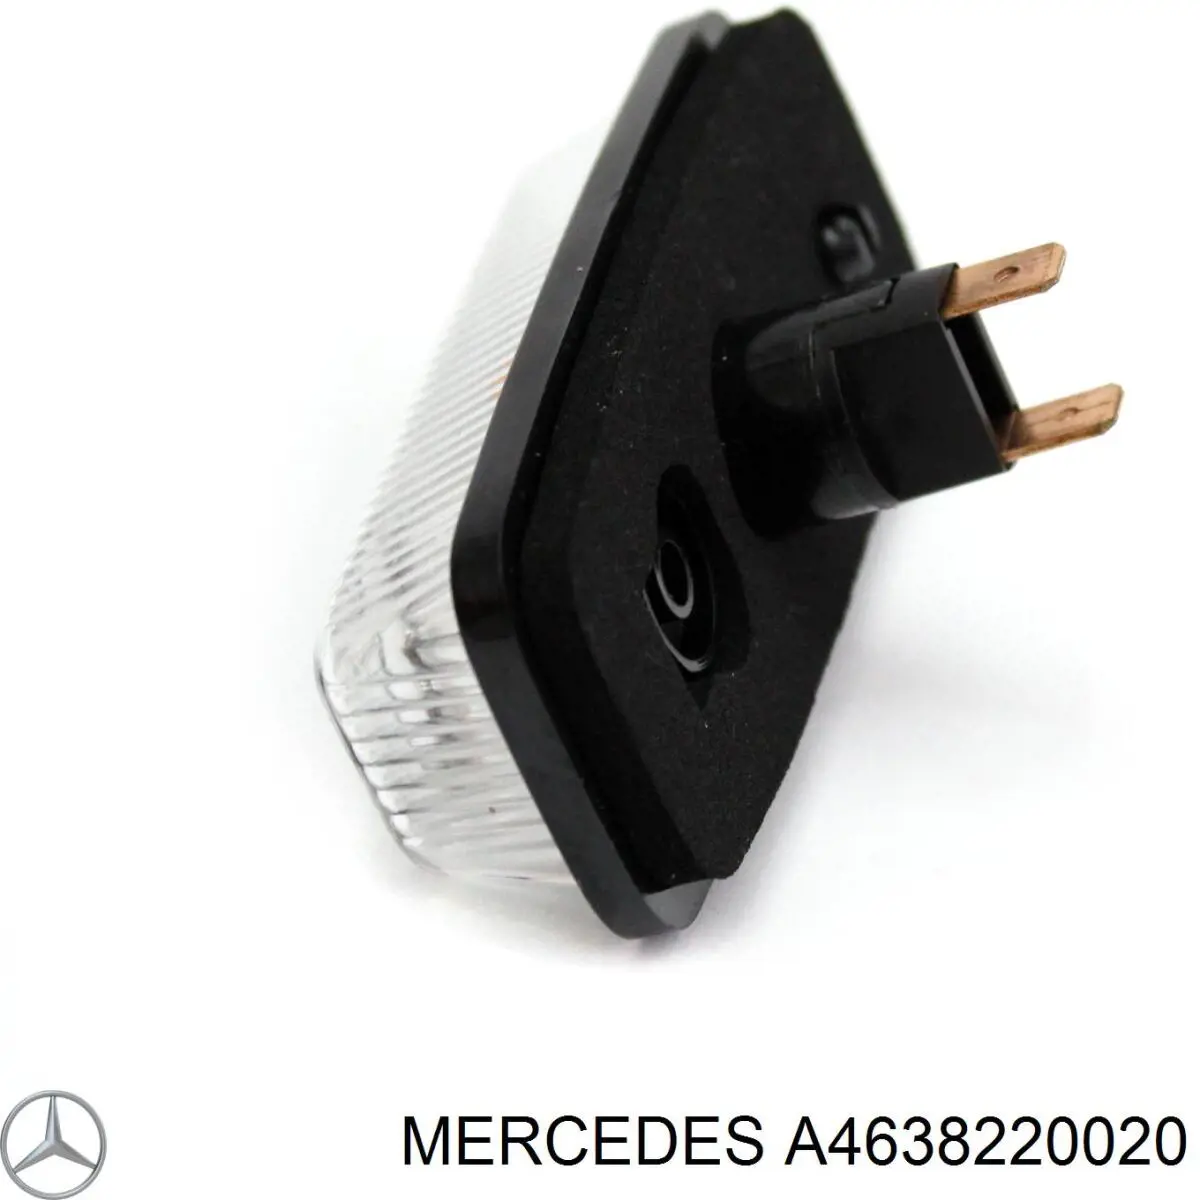 A4638220020 Mercedes luz intermitente guardabarros